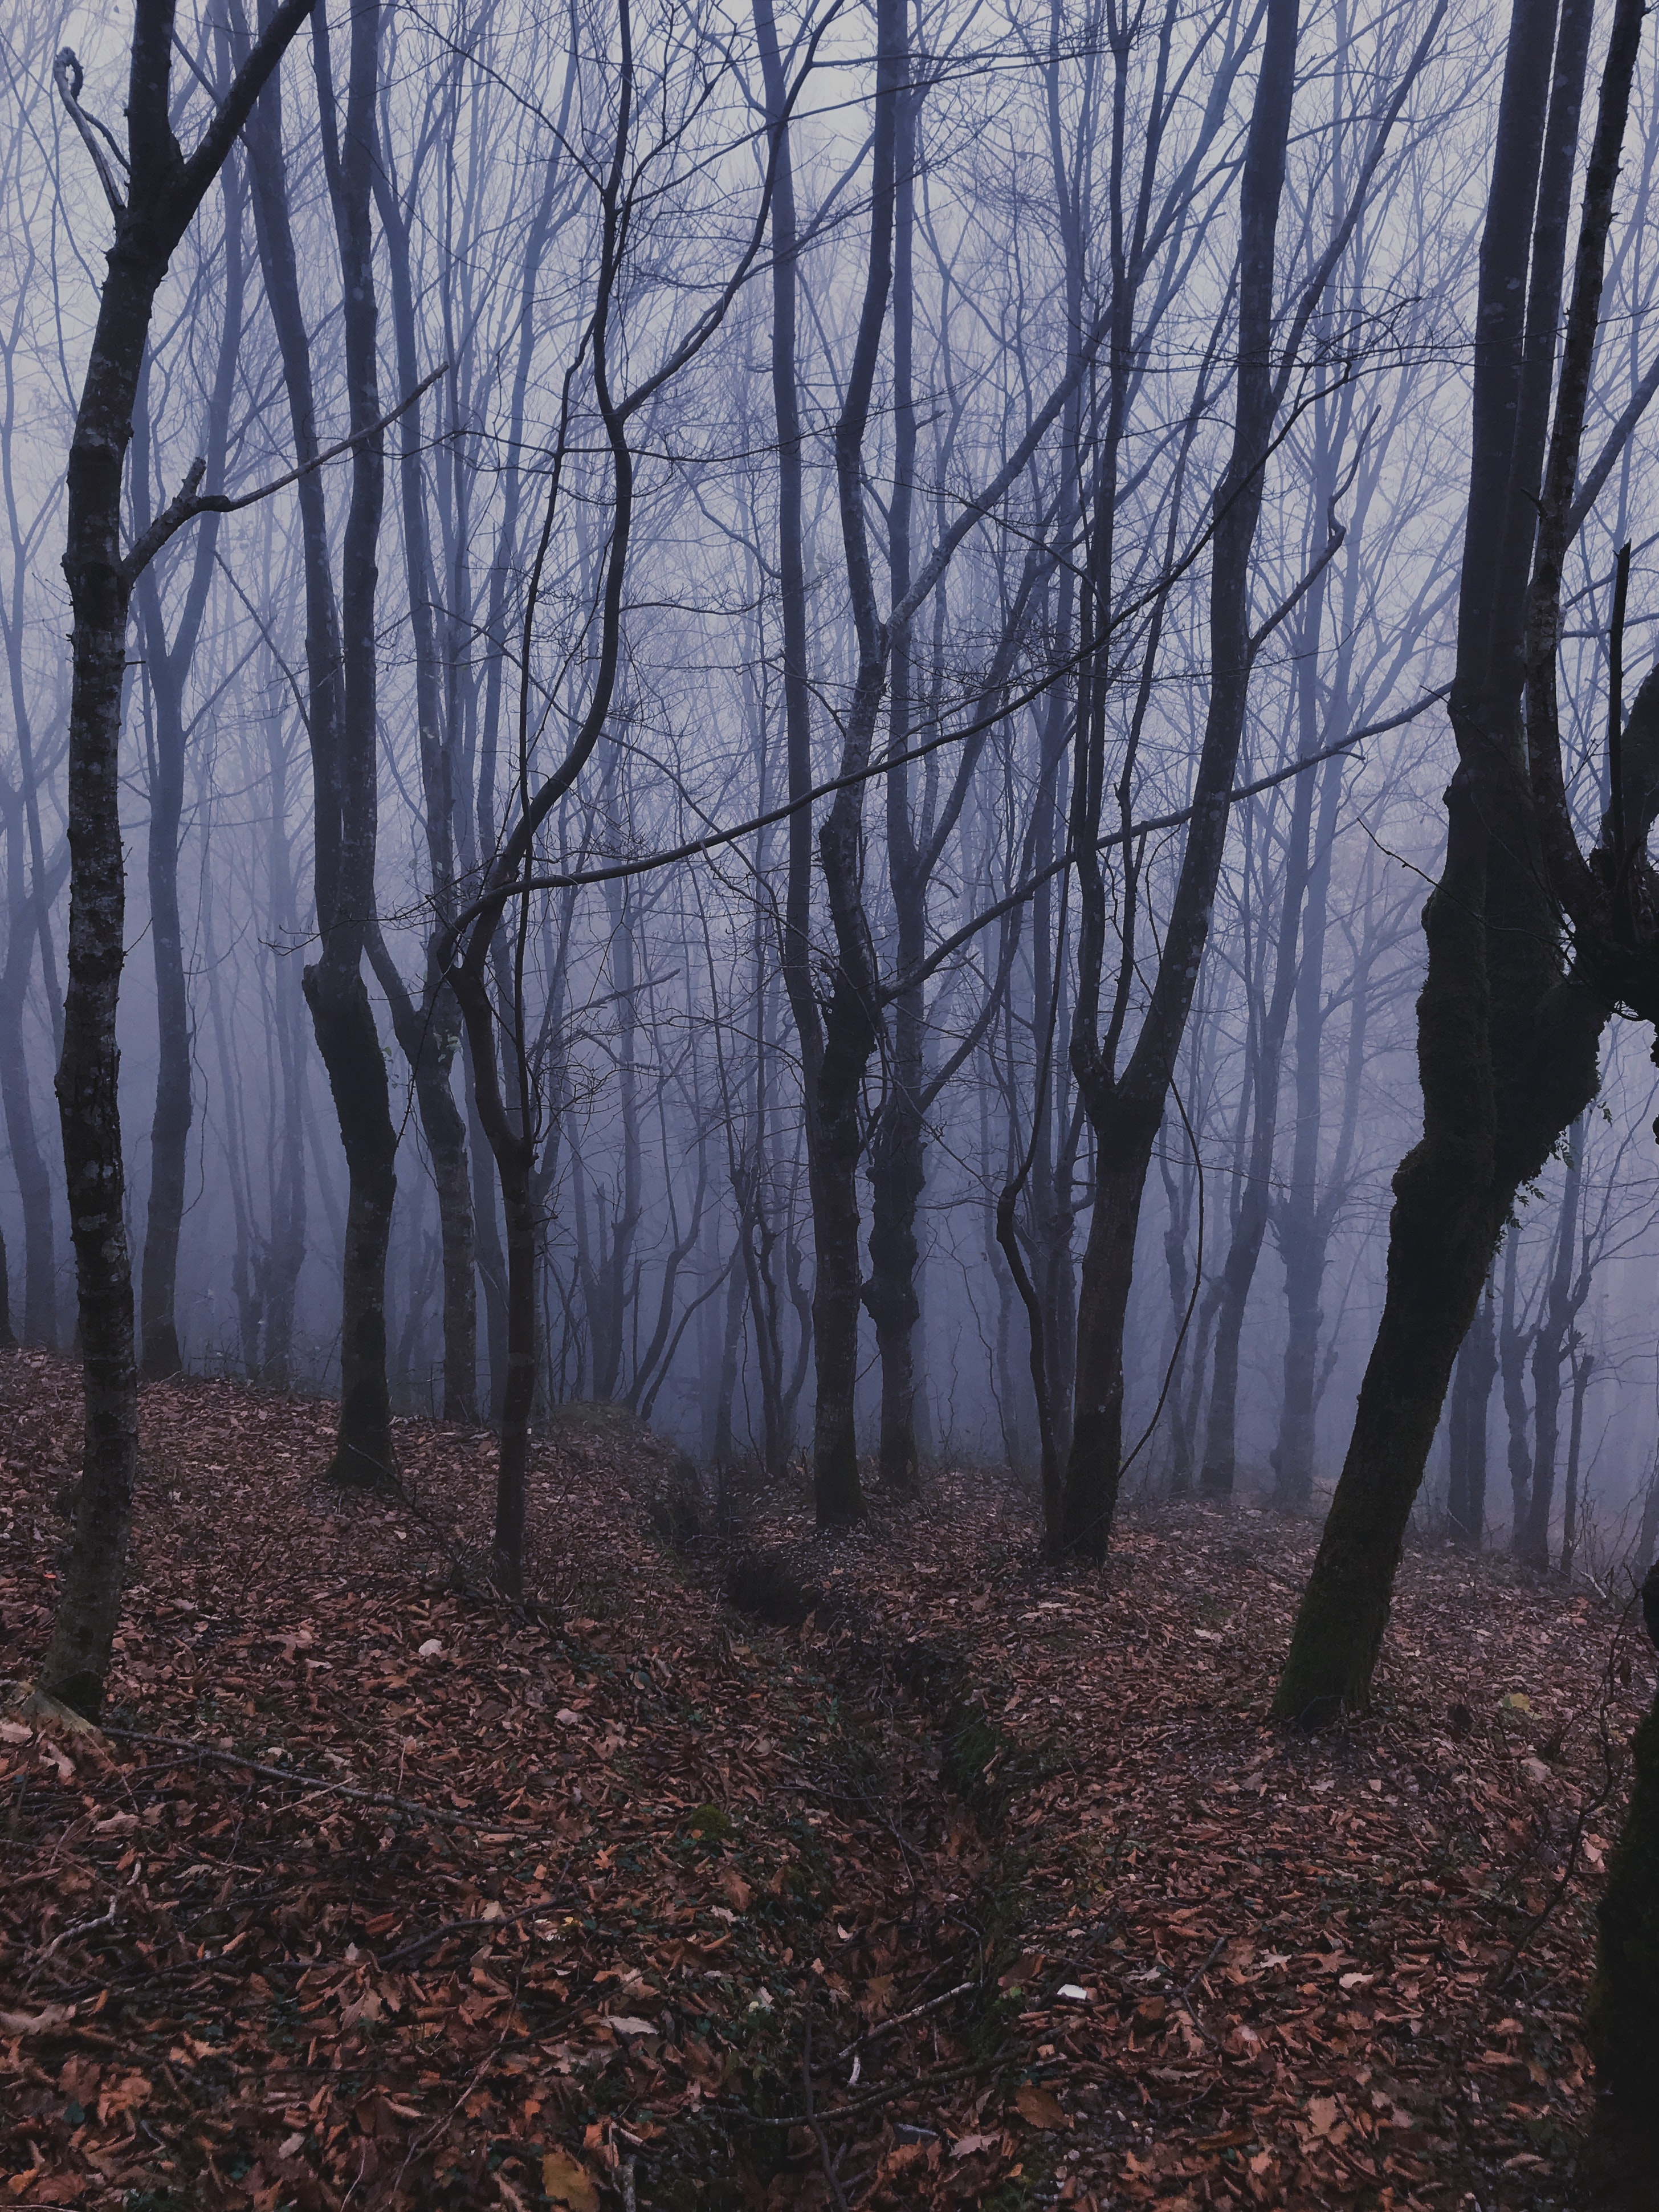 99830 descargar imagen naturaleza, árboles, bosque, niebla, calina, neblina: fondos de pantalla y protectores de pantalla gratis